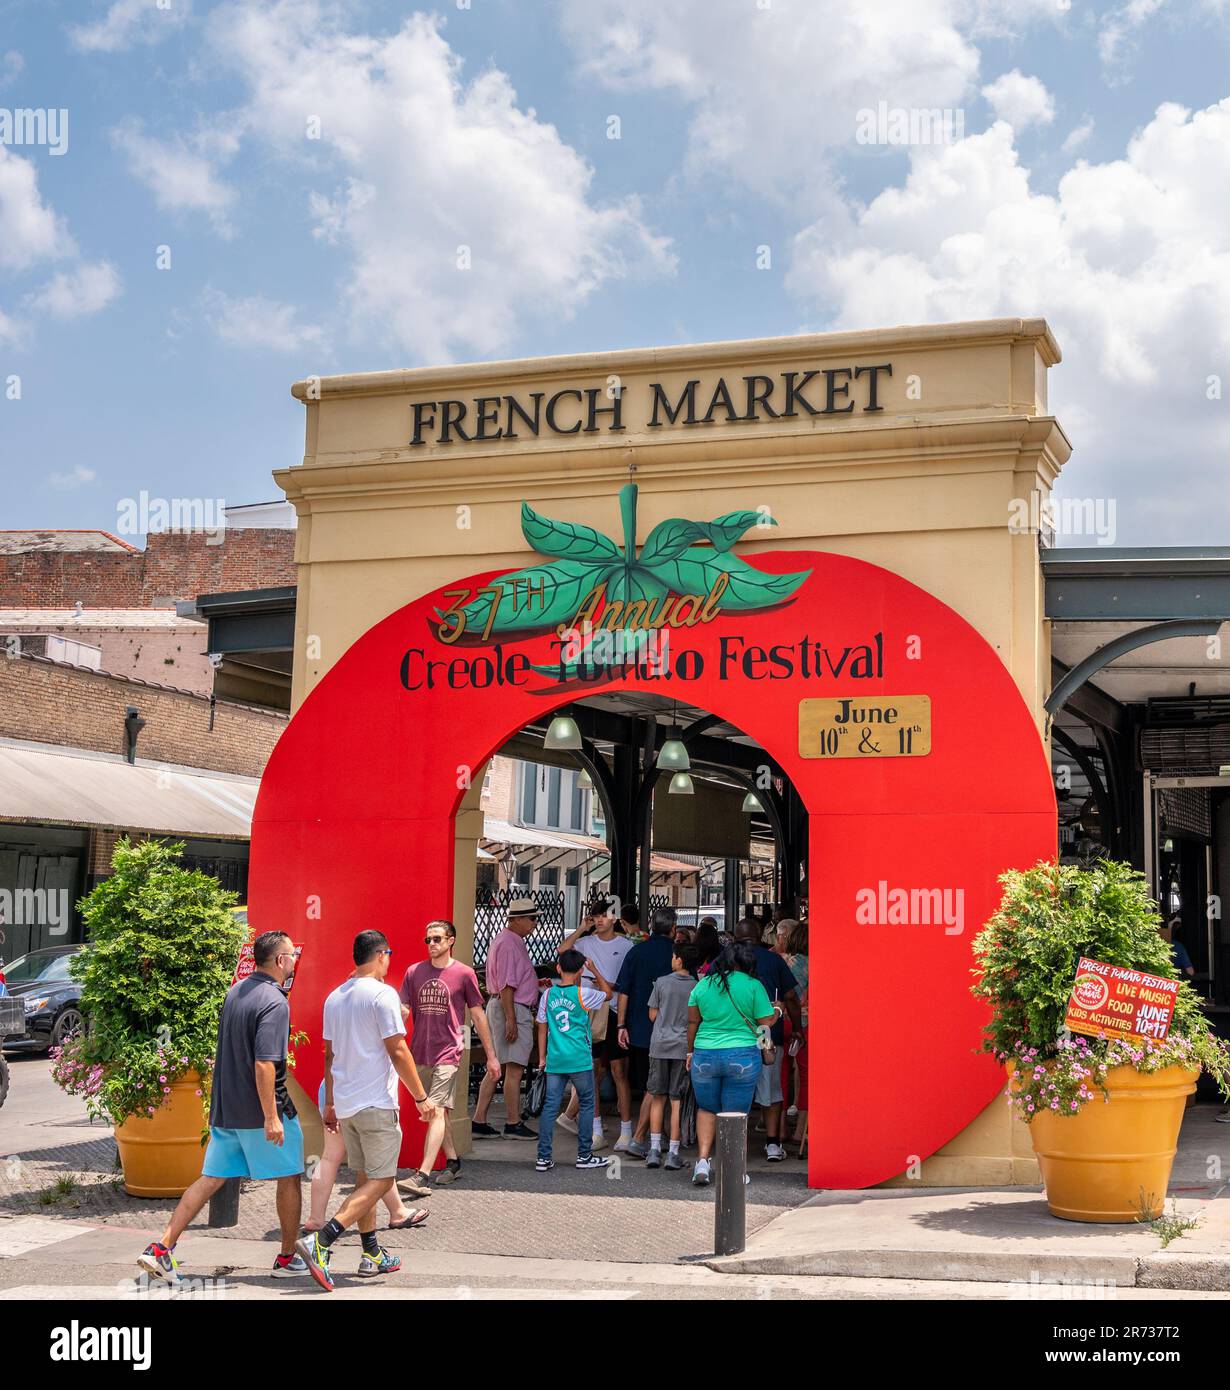 Creole Tomato Festival im French Market District des French Quarter, New Orleans, Louisiana, USA. Stockfoto